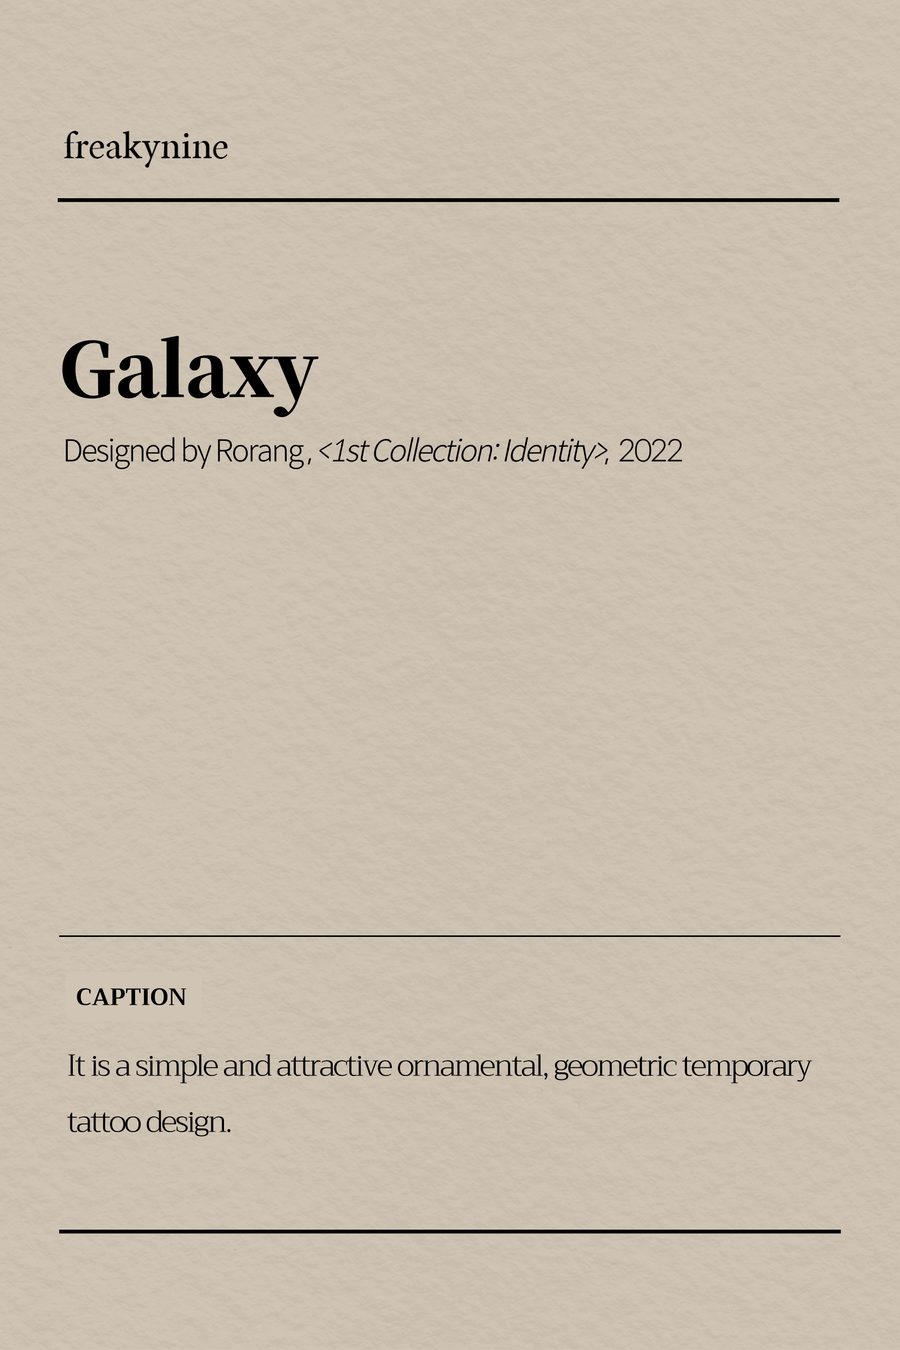 (Rorang) Galaxy (2EA) - freakynine